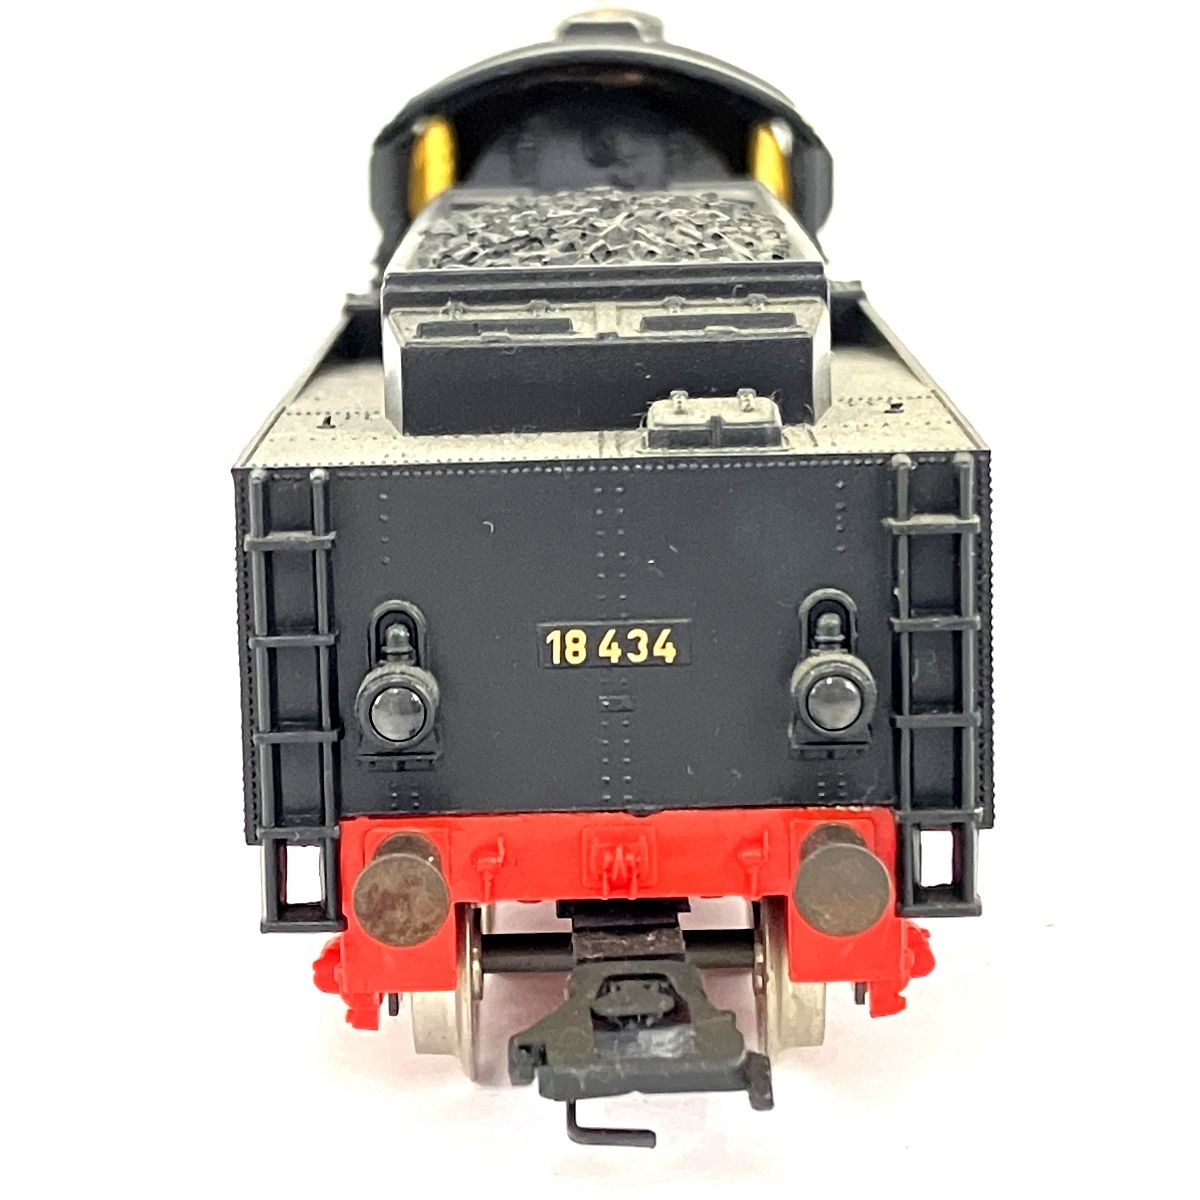 Marklin メルクリン 18 434 HOゲージ 蒸気機関車 鉄道模型 ジャンク 